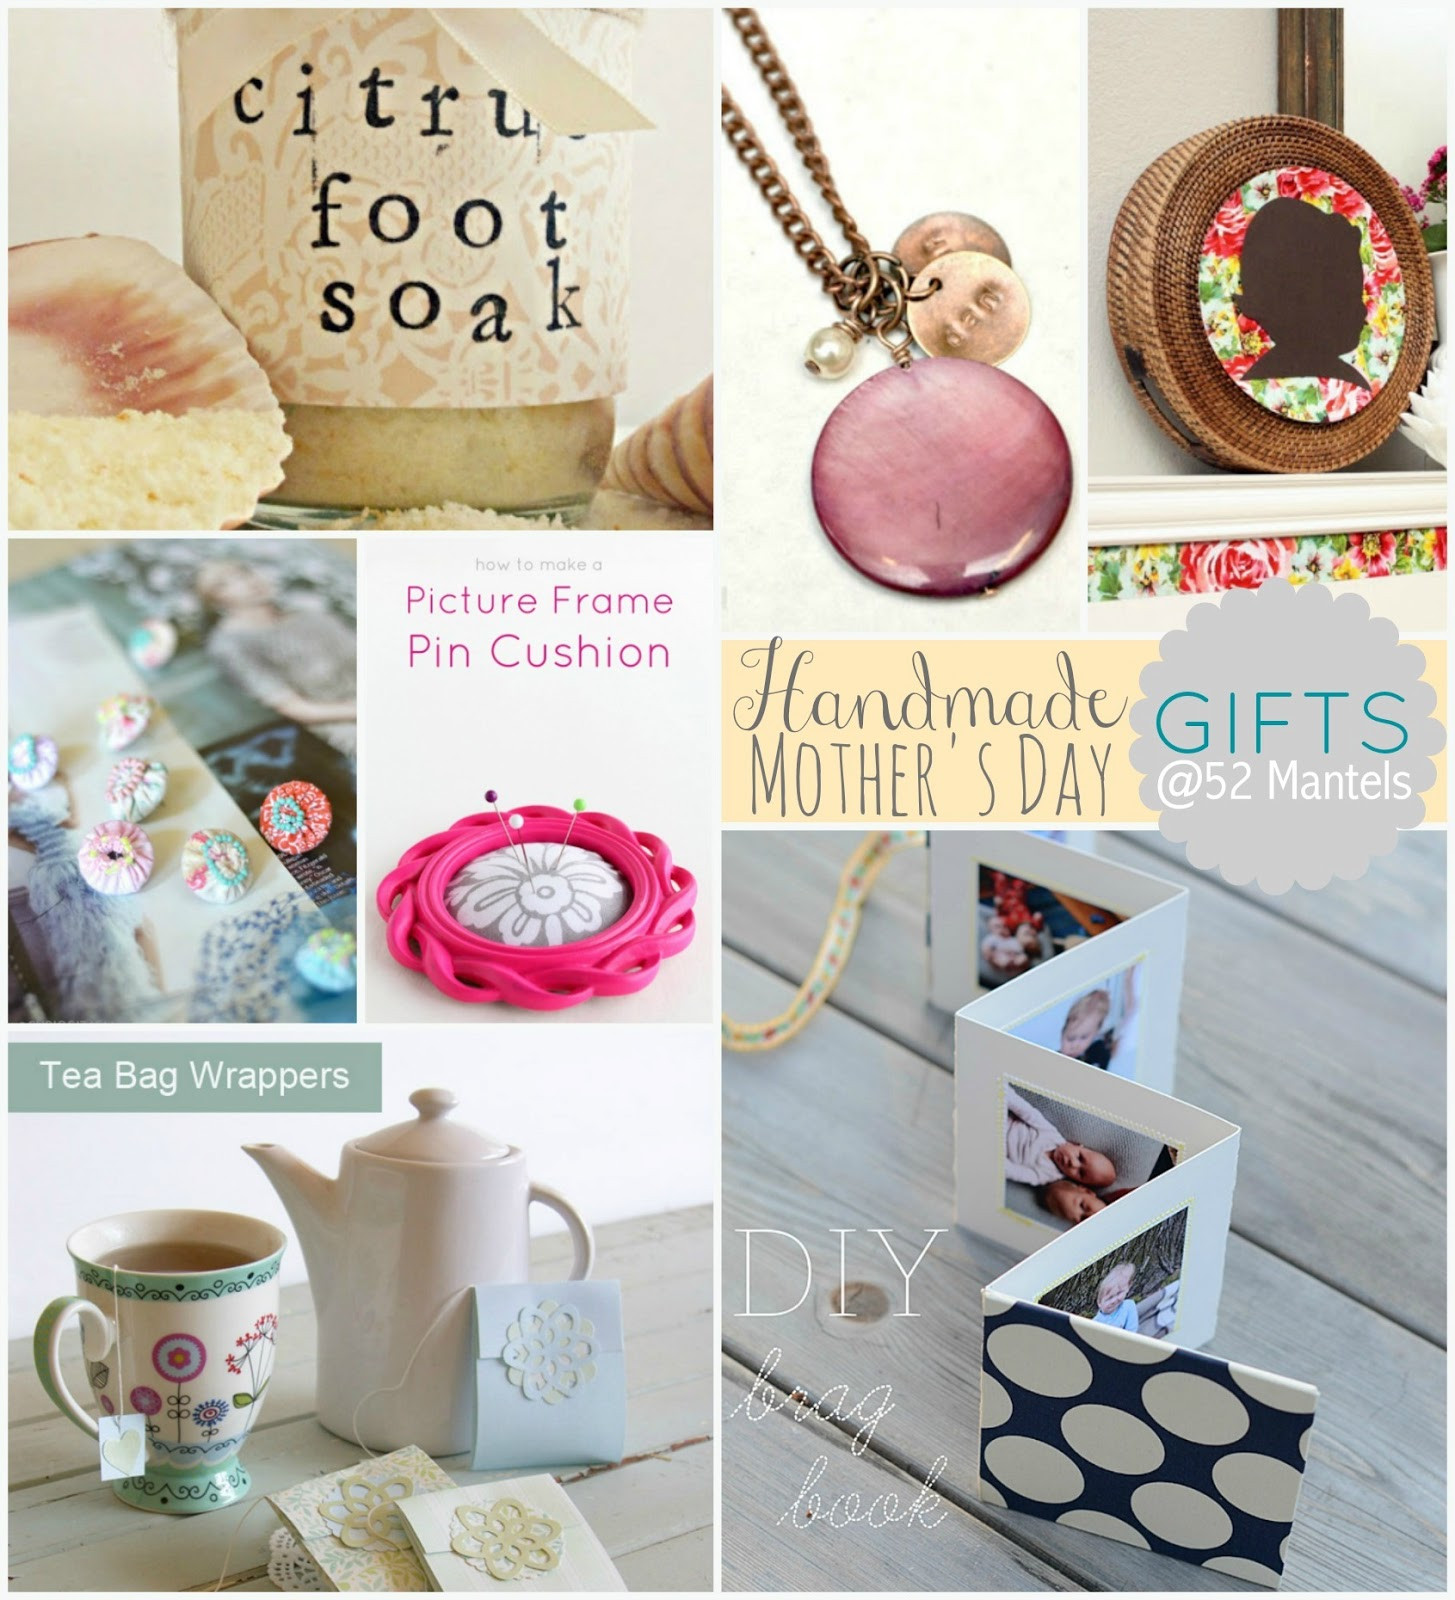 Mother Day Gift Ideas Handmade
 52 Mantels Handmade Mother s Day Gift Ideas